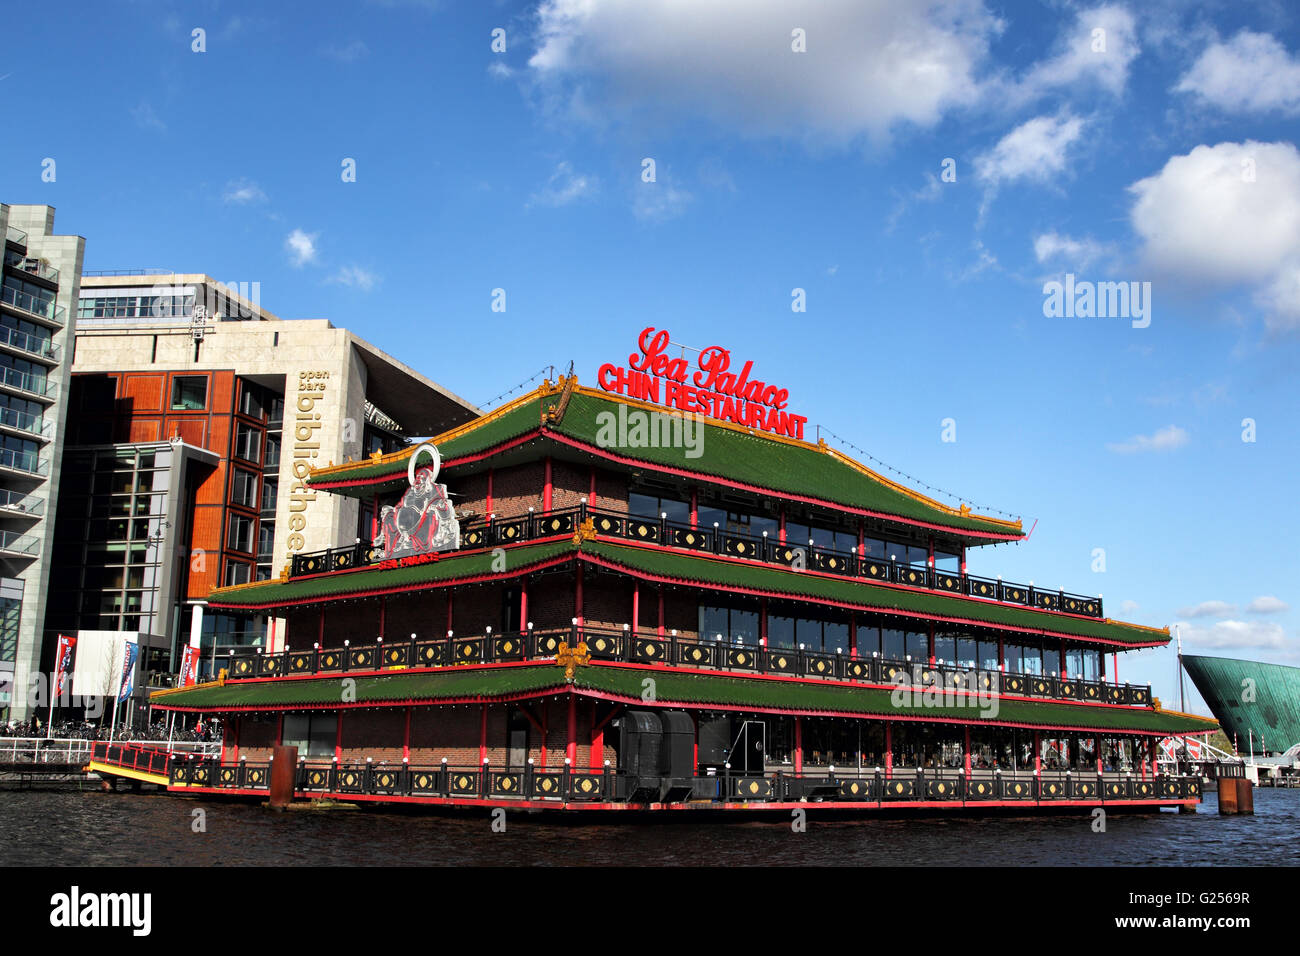 Wonderbaarlijk The floating chinese restaurant Sea Palace in Amsterdam NQ-95